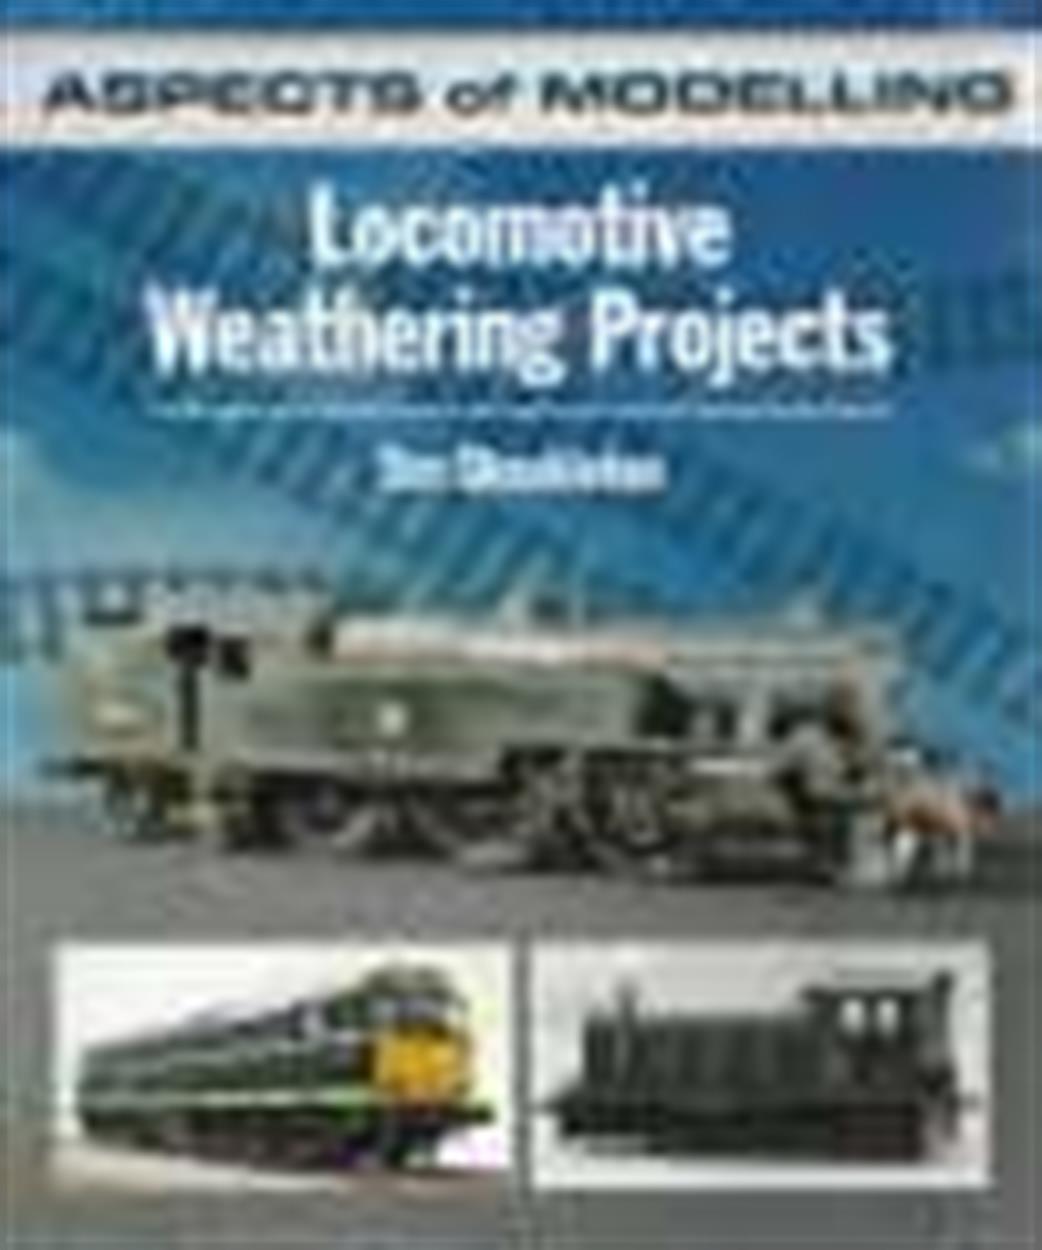 Ian Allan Publishing  9780711038134 Locomotive Weathering Project by Tim Shackleton